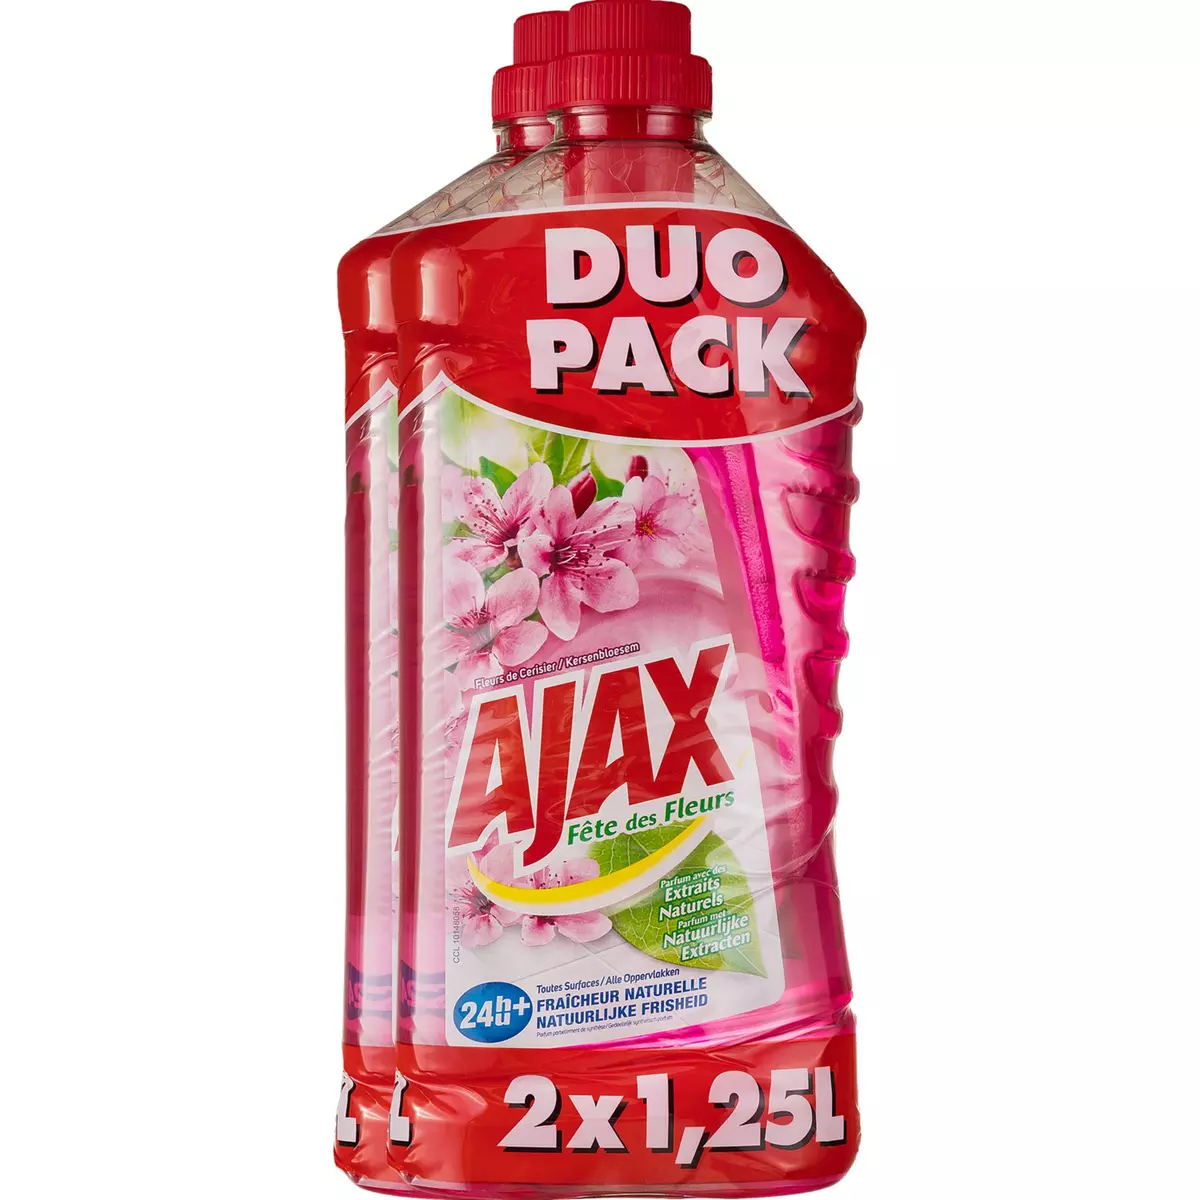 AJAX Ajax fête des fleurs cerisier 2x1,25l